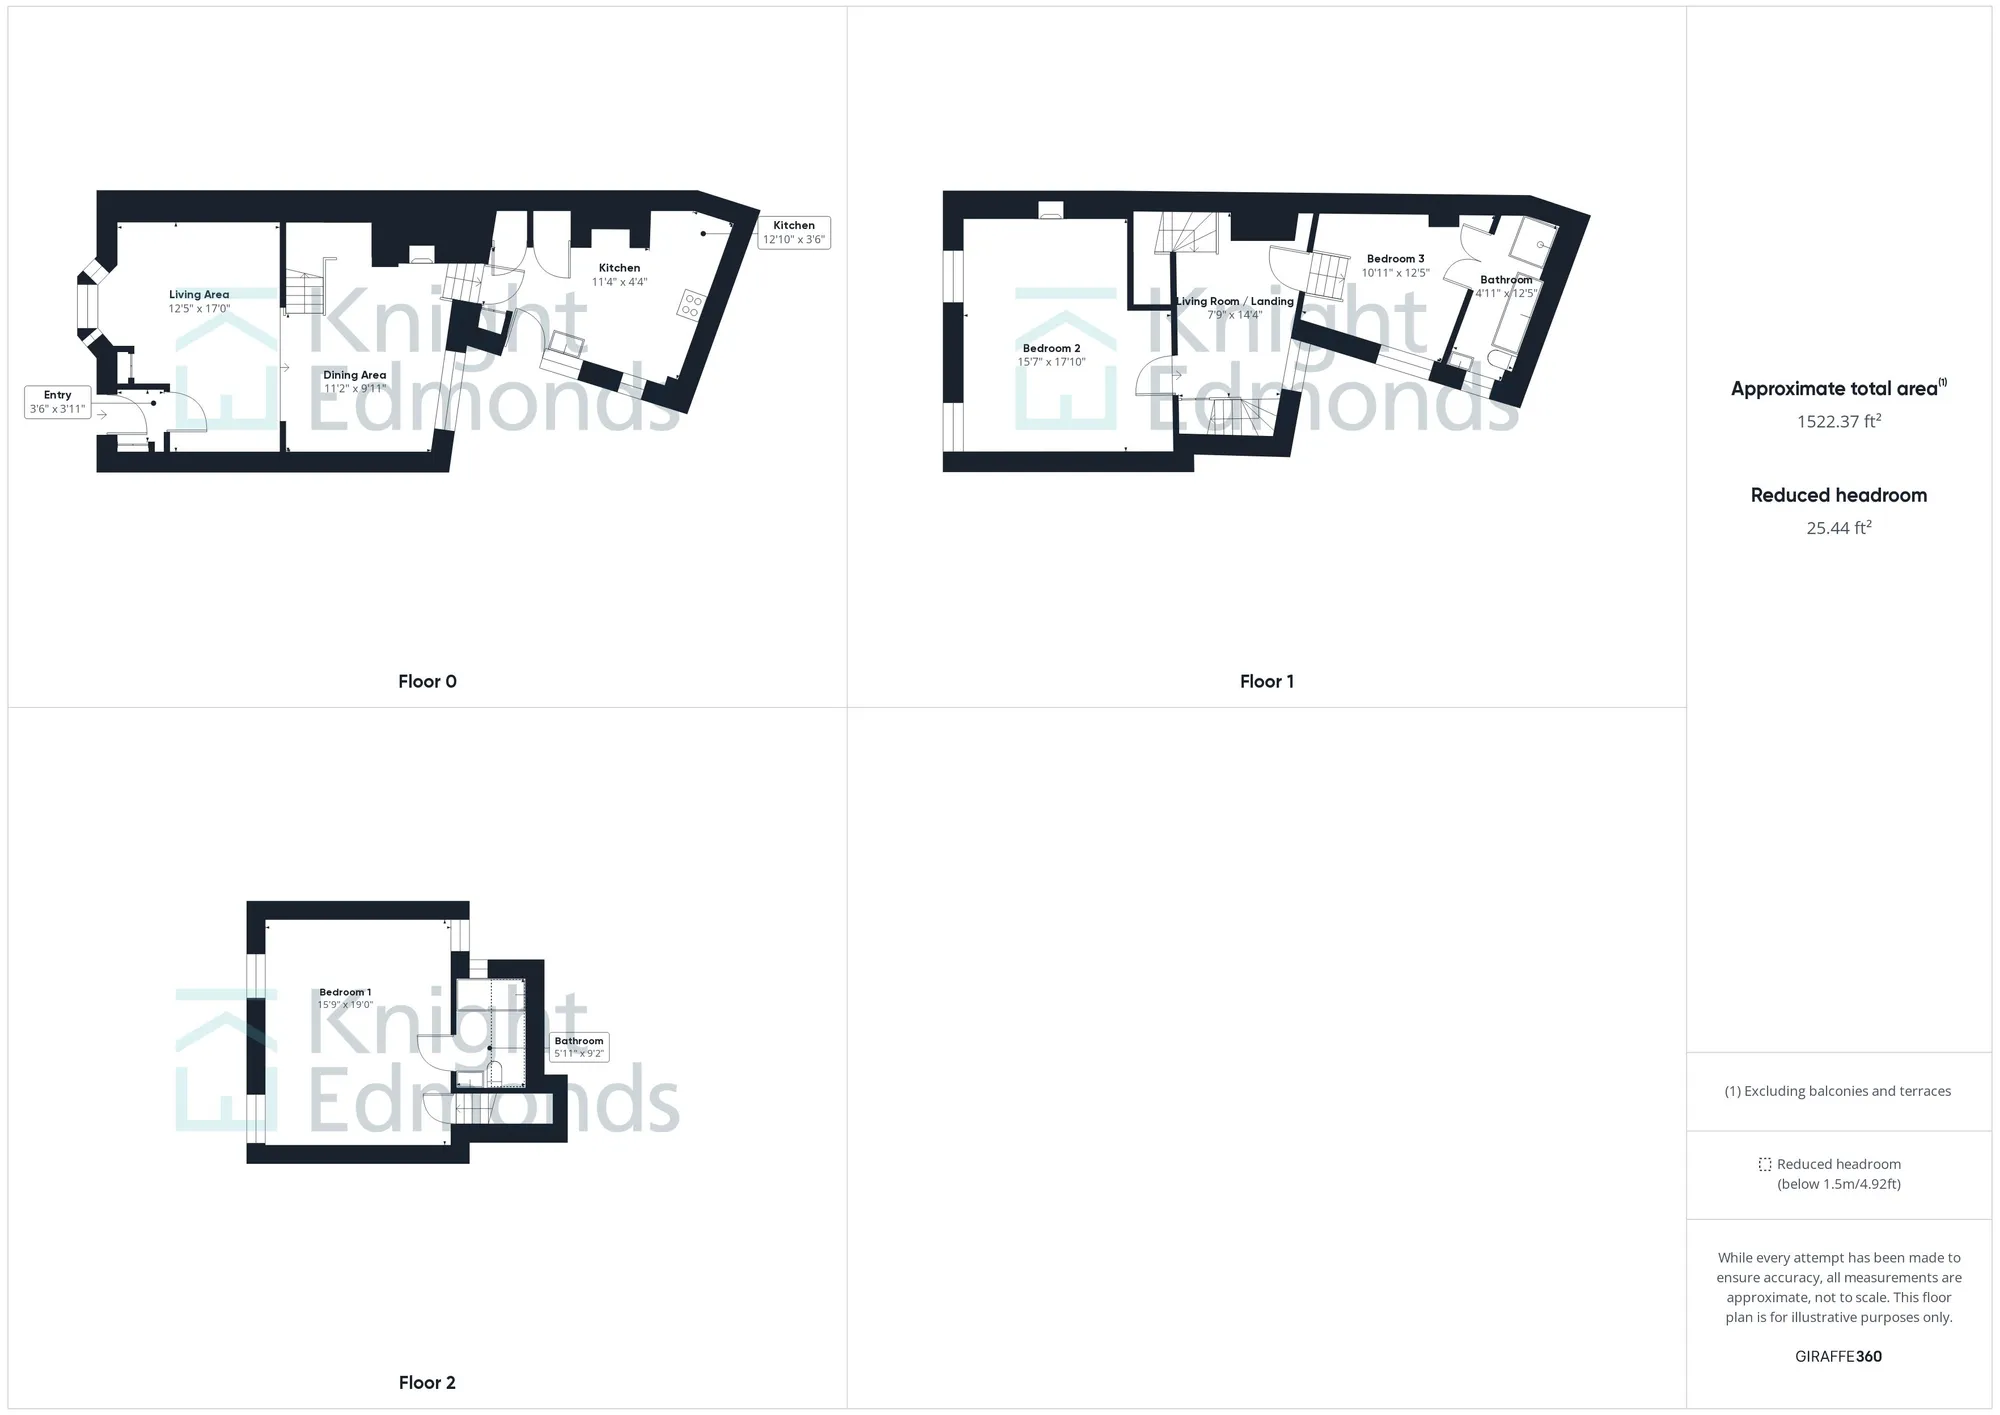 3 bed mid-terraced house for sale in Tonbridge Road, Maidstone - Property floorplan